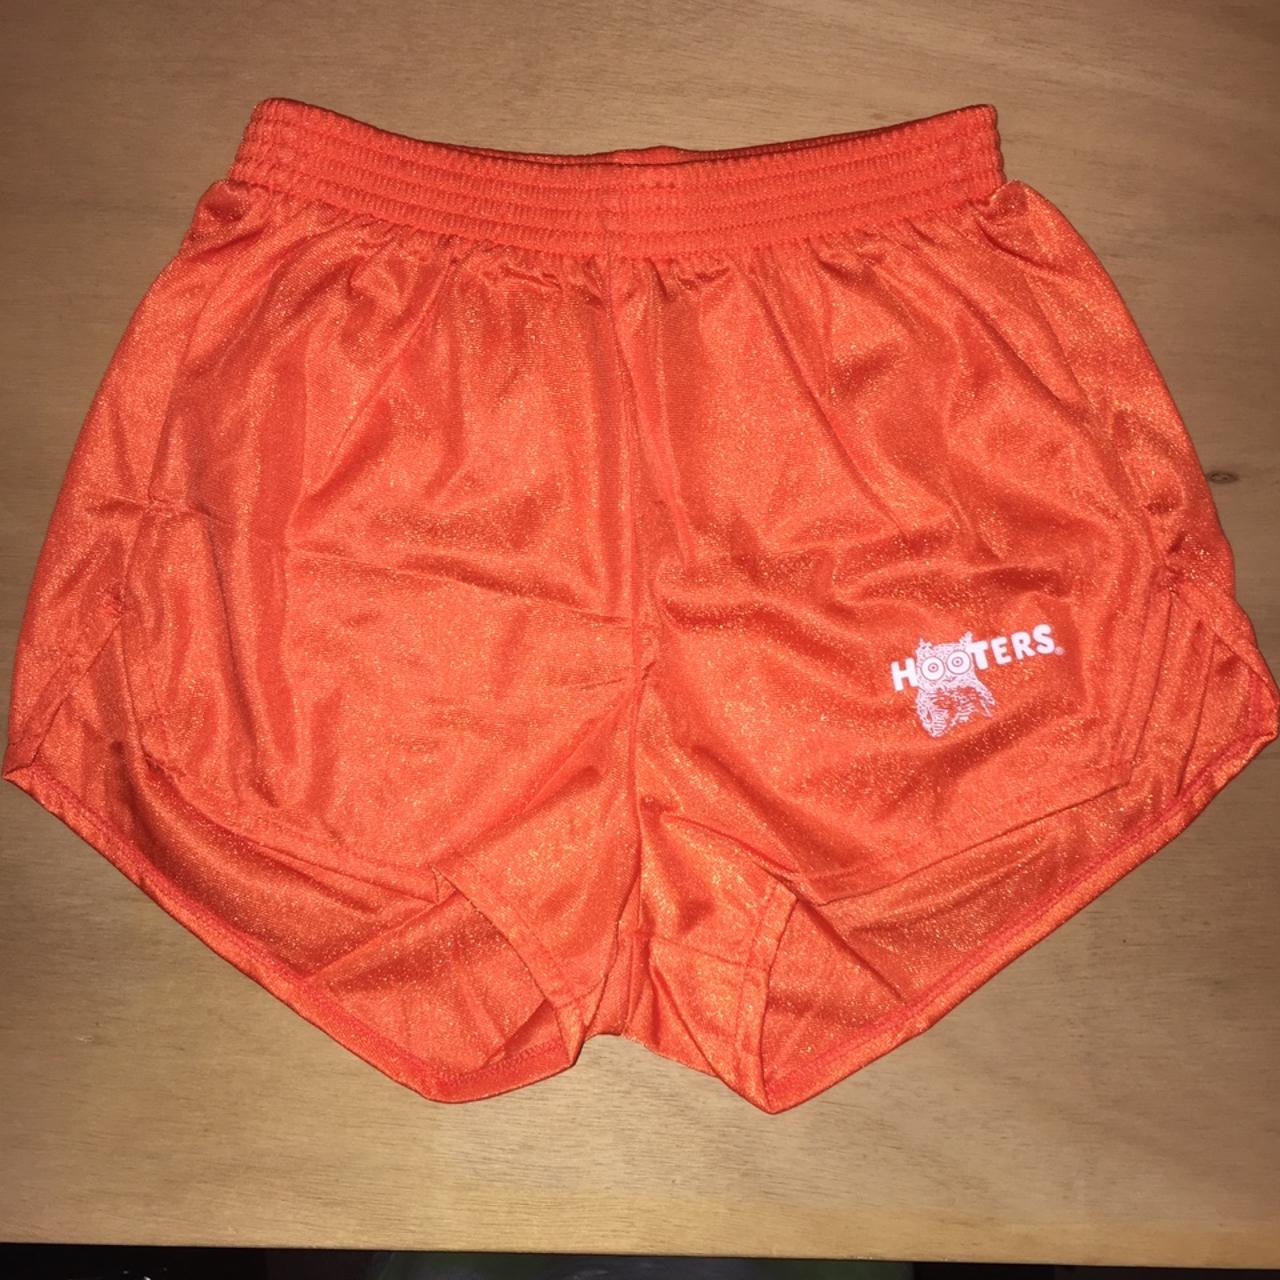 New Sexy Hooters Girl Uniform Shorts Stretchy Size Medium 